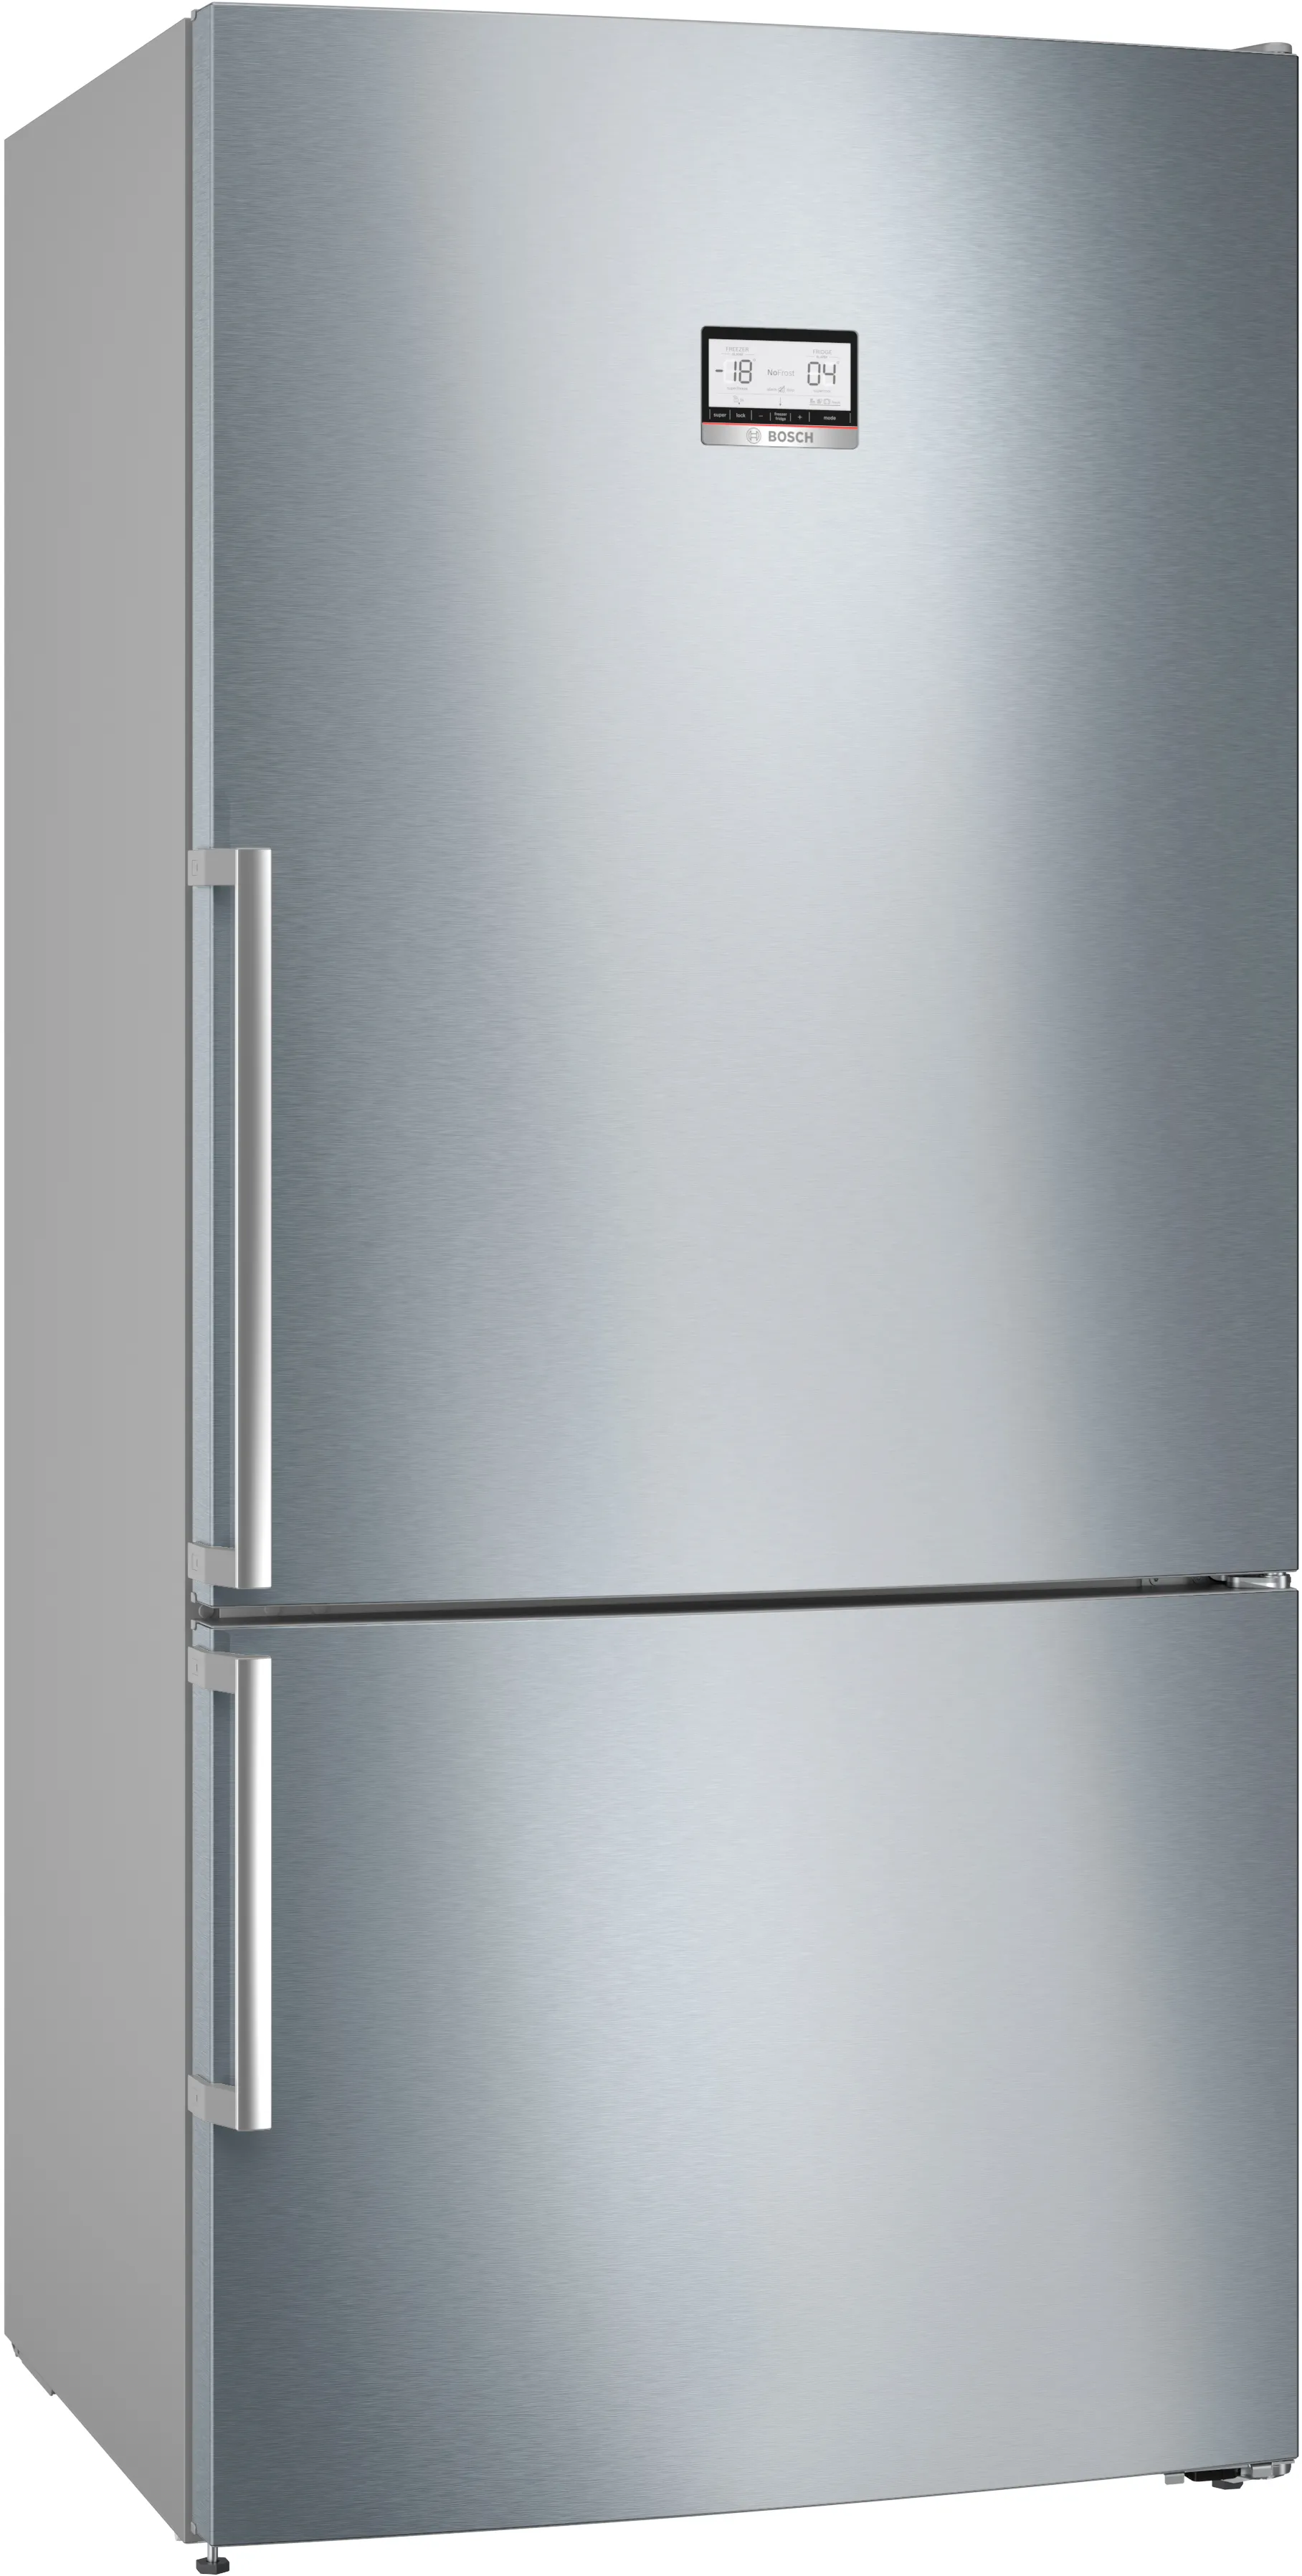 Series 6 Freestanding Refrigerator with Bottom Freezer 186 x 86 cm Stainless steel (with anti-fingerprint) 